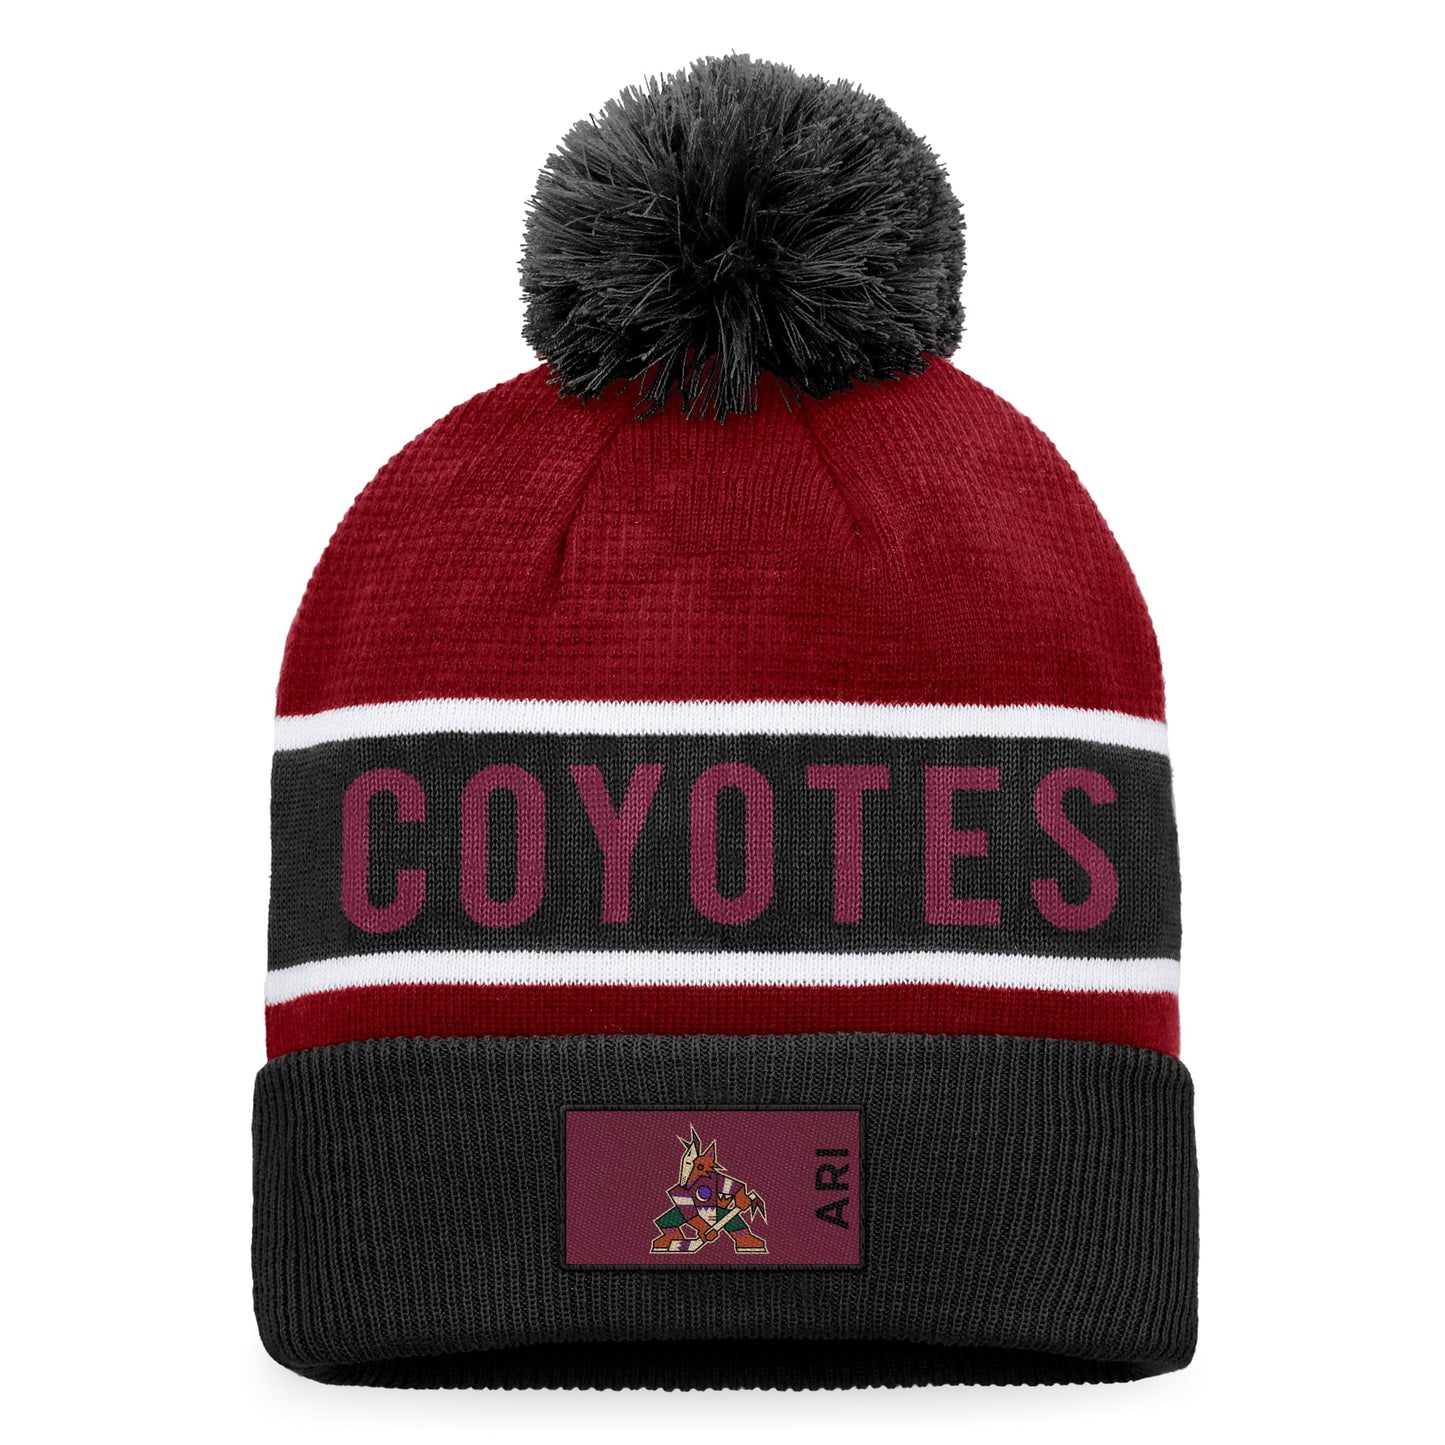 Men's Fanatics Branded Black/Garnet Arizona Coyotes Authentic Pro Rink Cuffed Knit Hat with Pom - OSFA